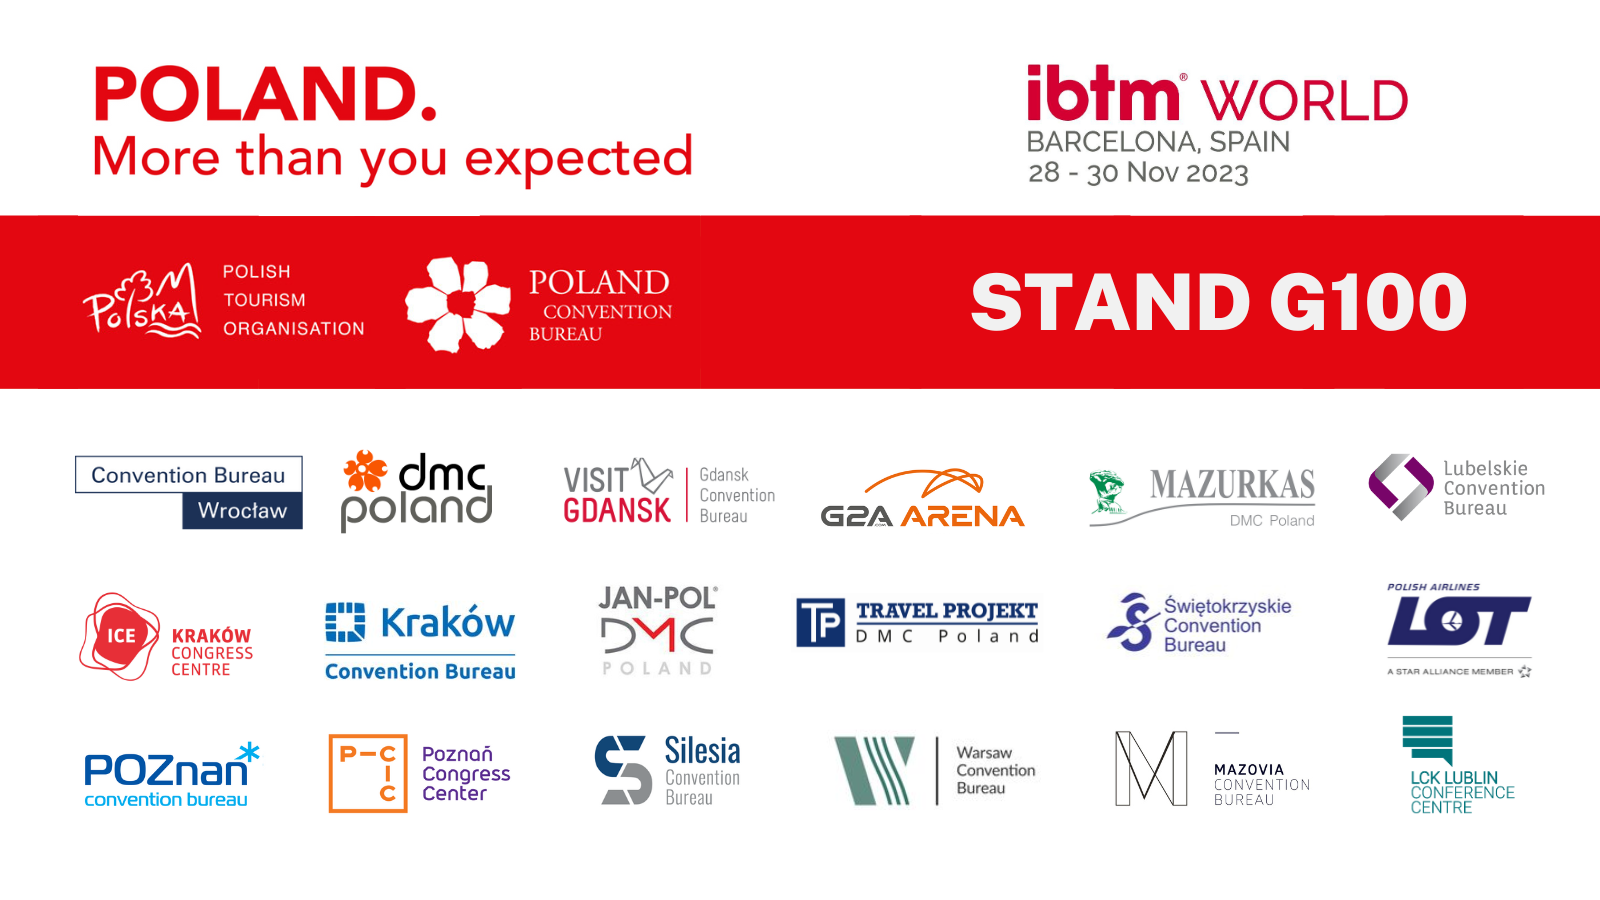 IBTMworld-poland-meetings-eventprofs-ibtm-events-all-partners-polandcvb-3.png